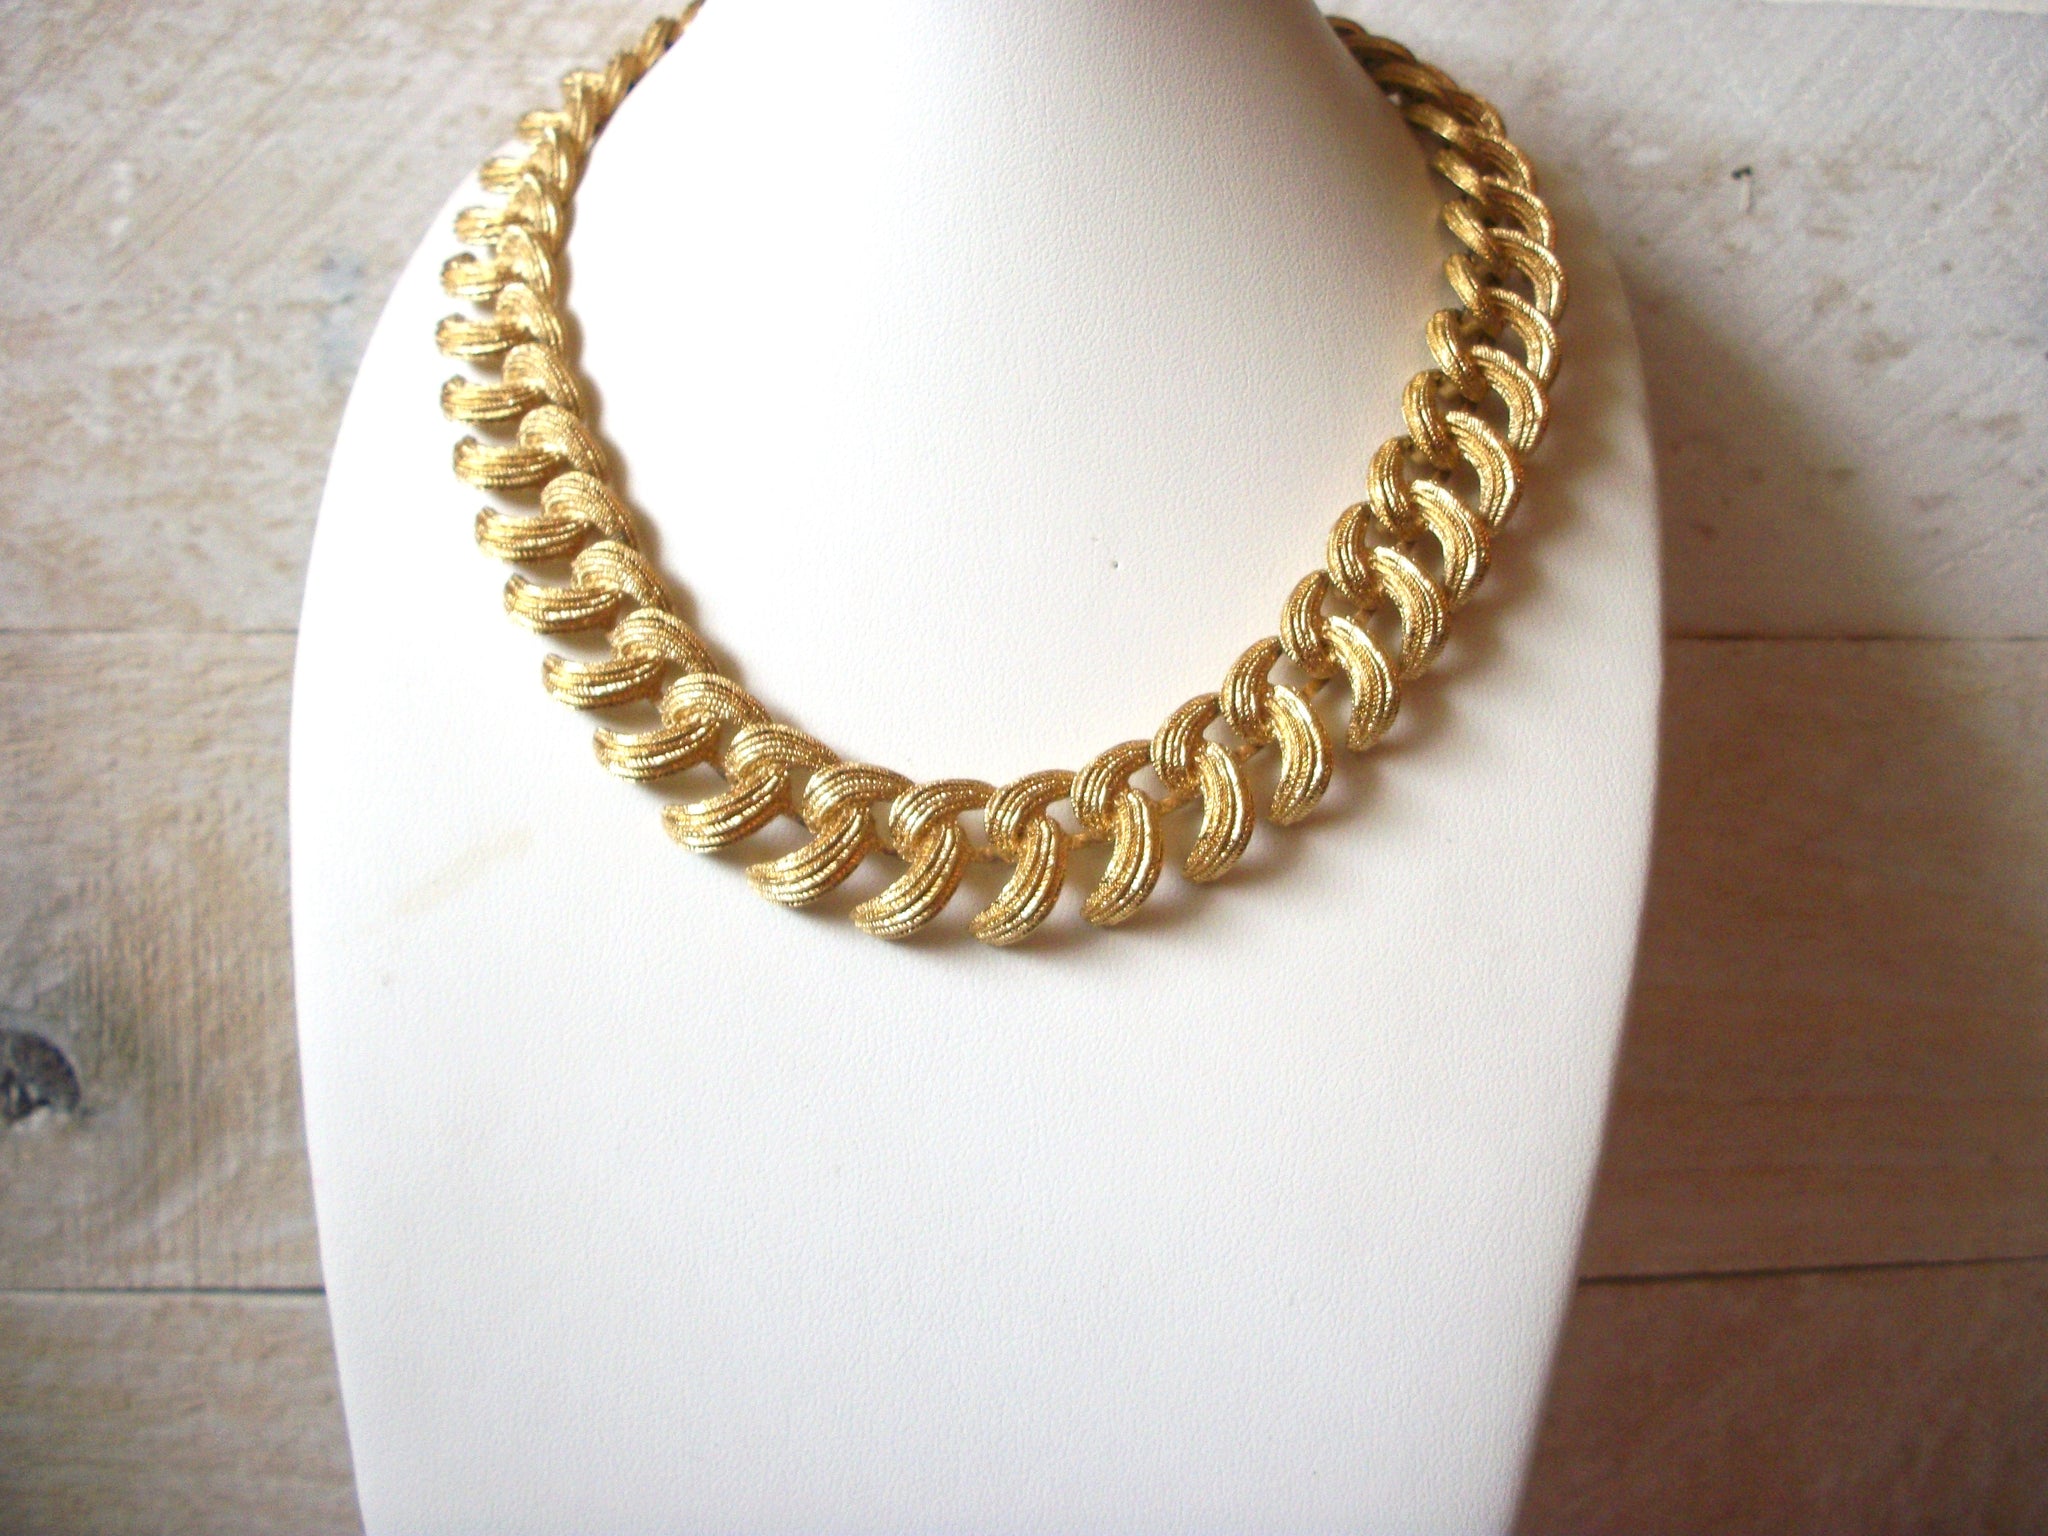 Vintage MONET Cleopatra Necklace 52820